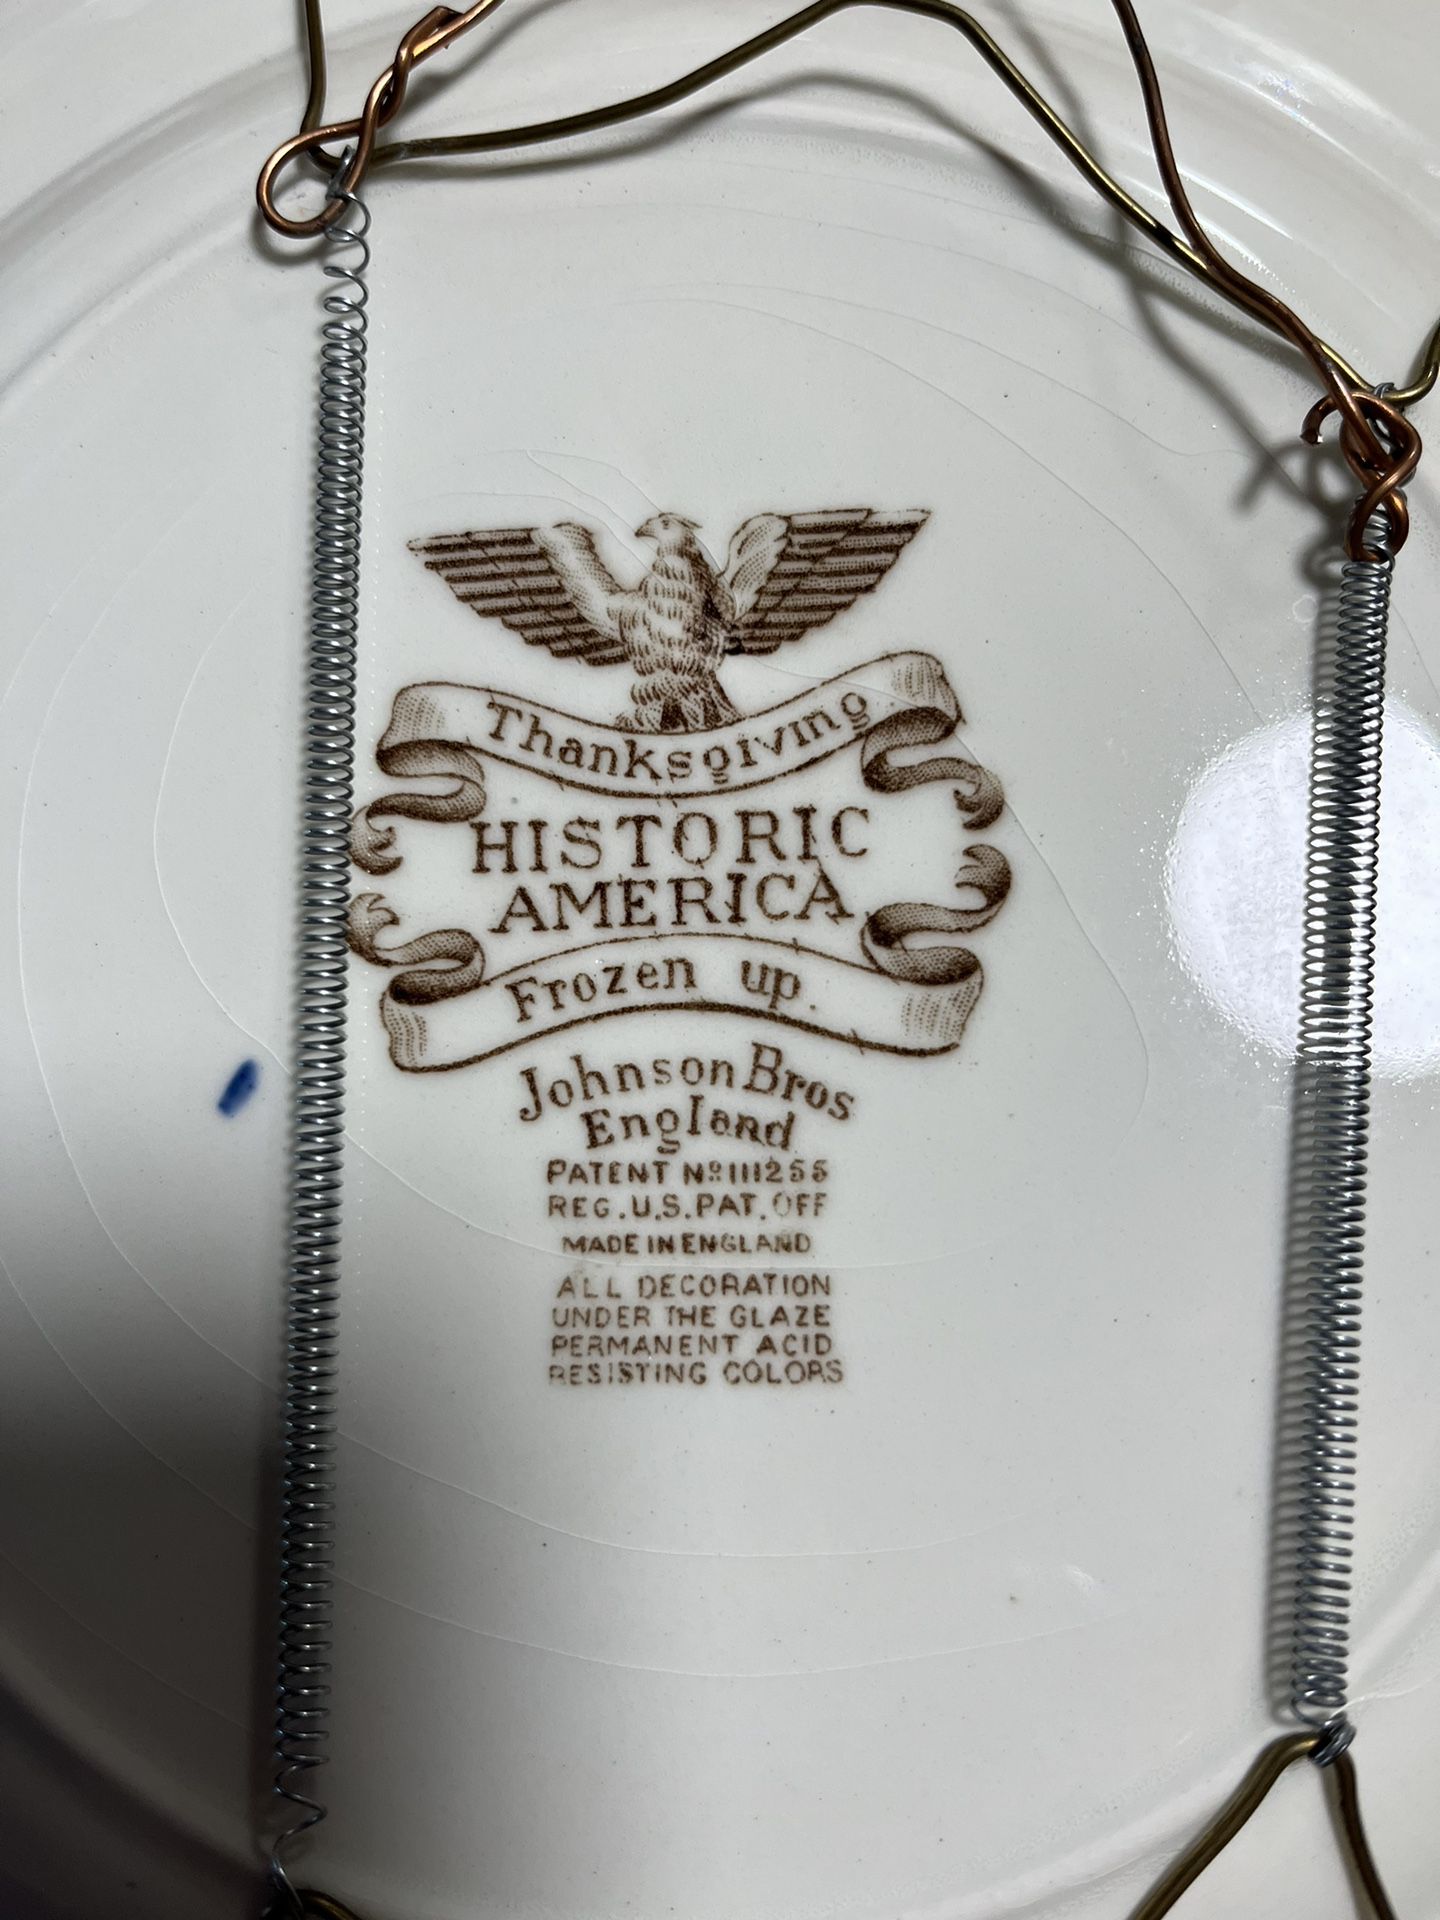 Johnson Bros England Historic America collector plate